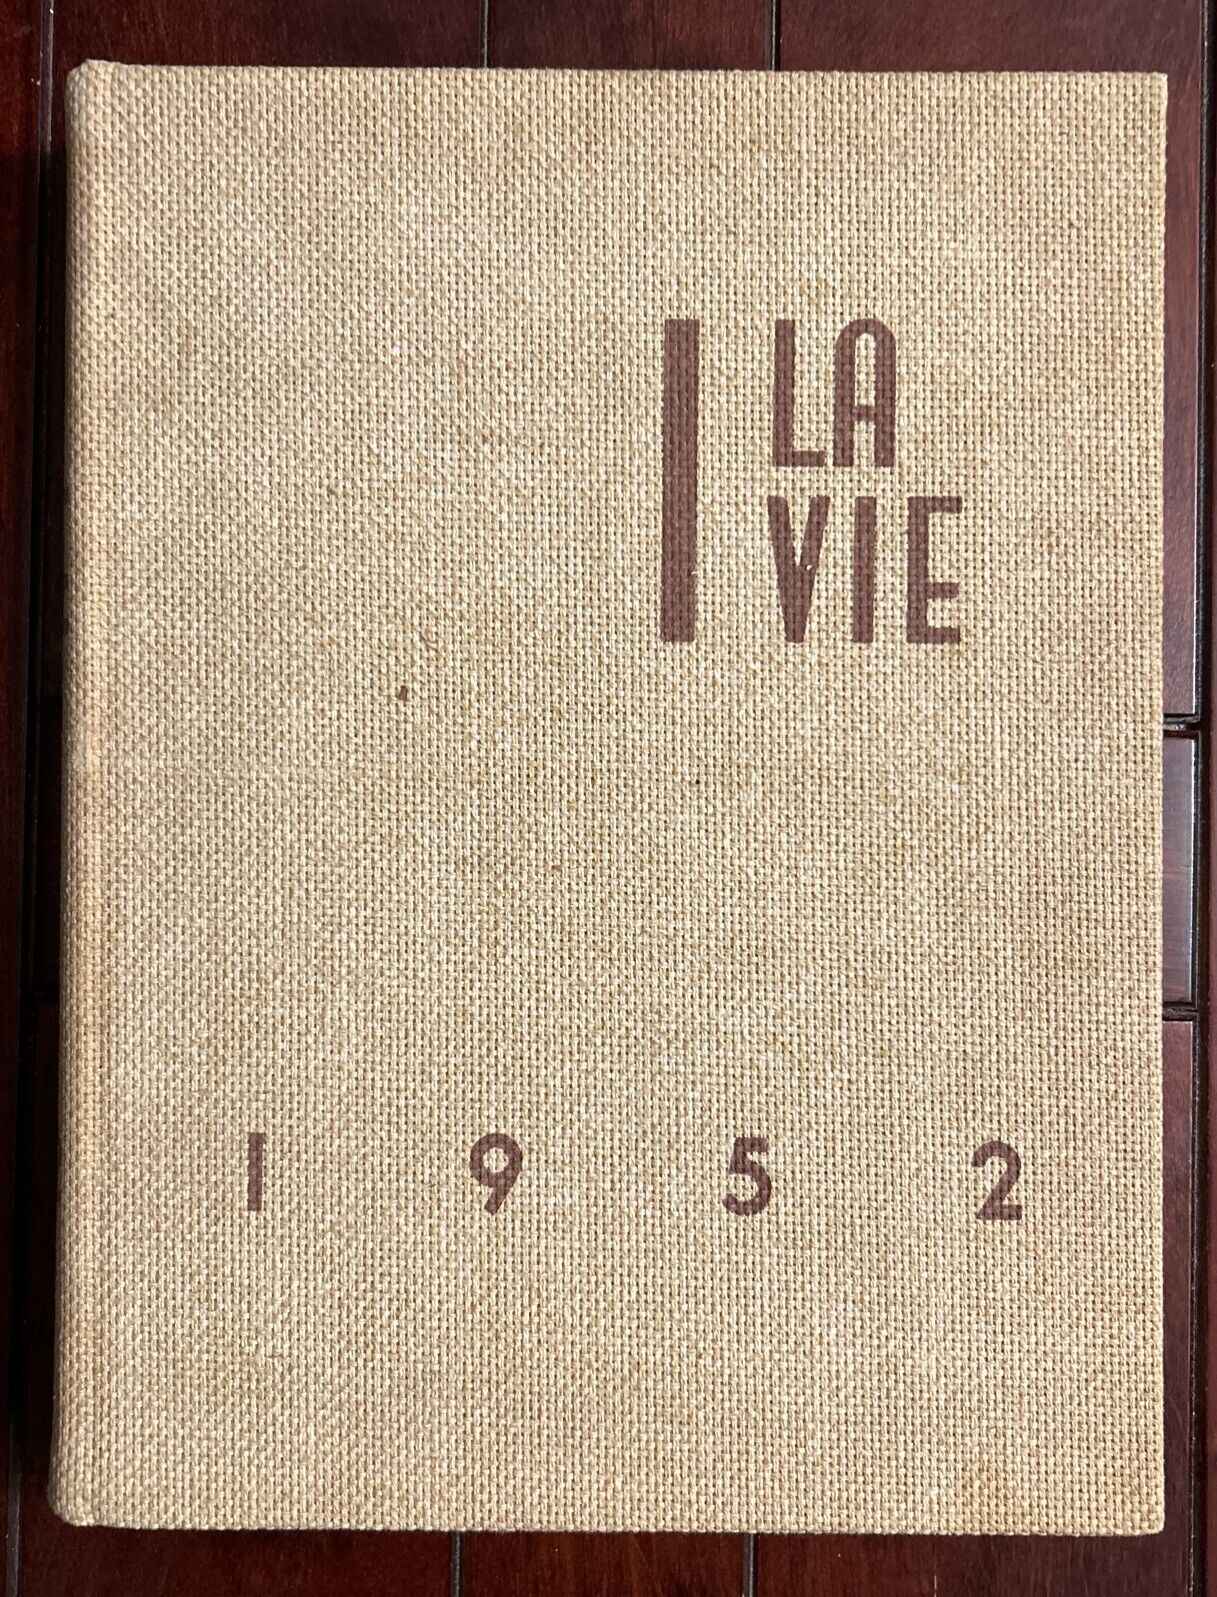 1952 Penn State University Yearbook La Vie